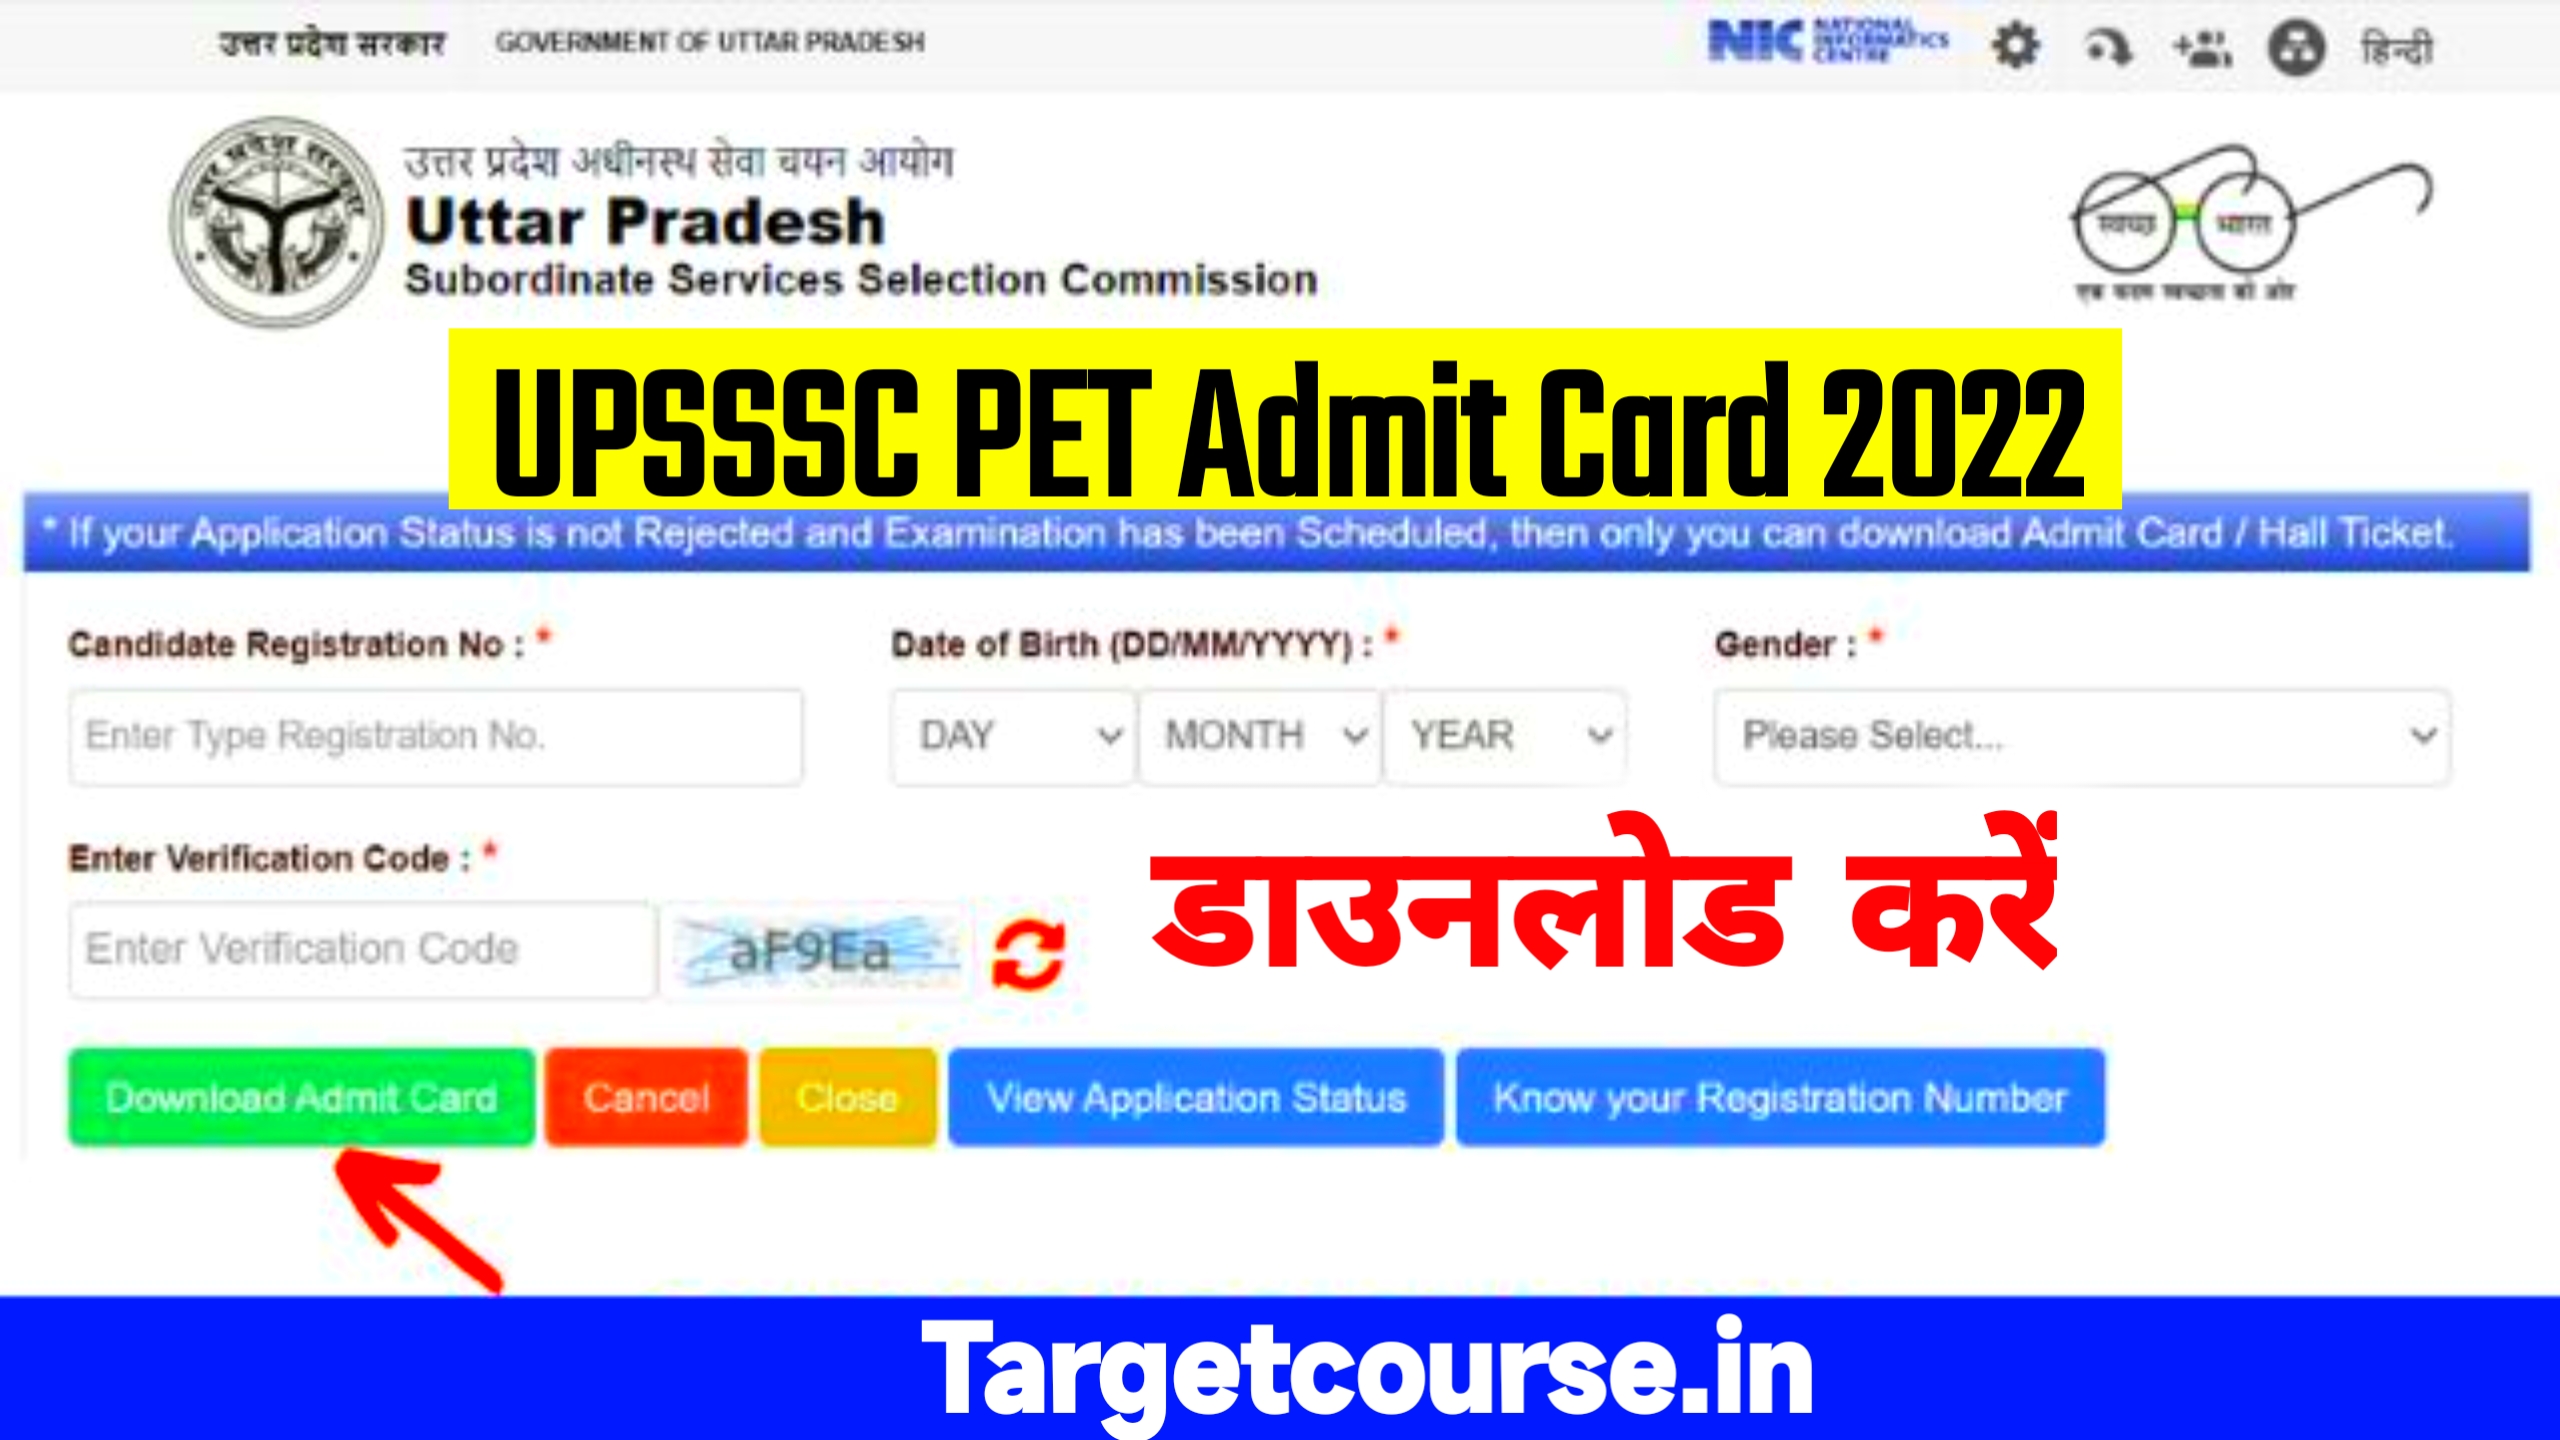 UPSSSC PET Admit Card 2022 Download Link ~ @upsssc.gov.in Hall Ticket